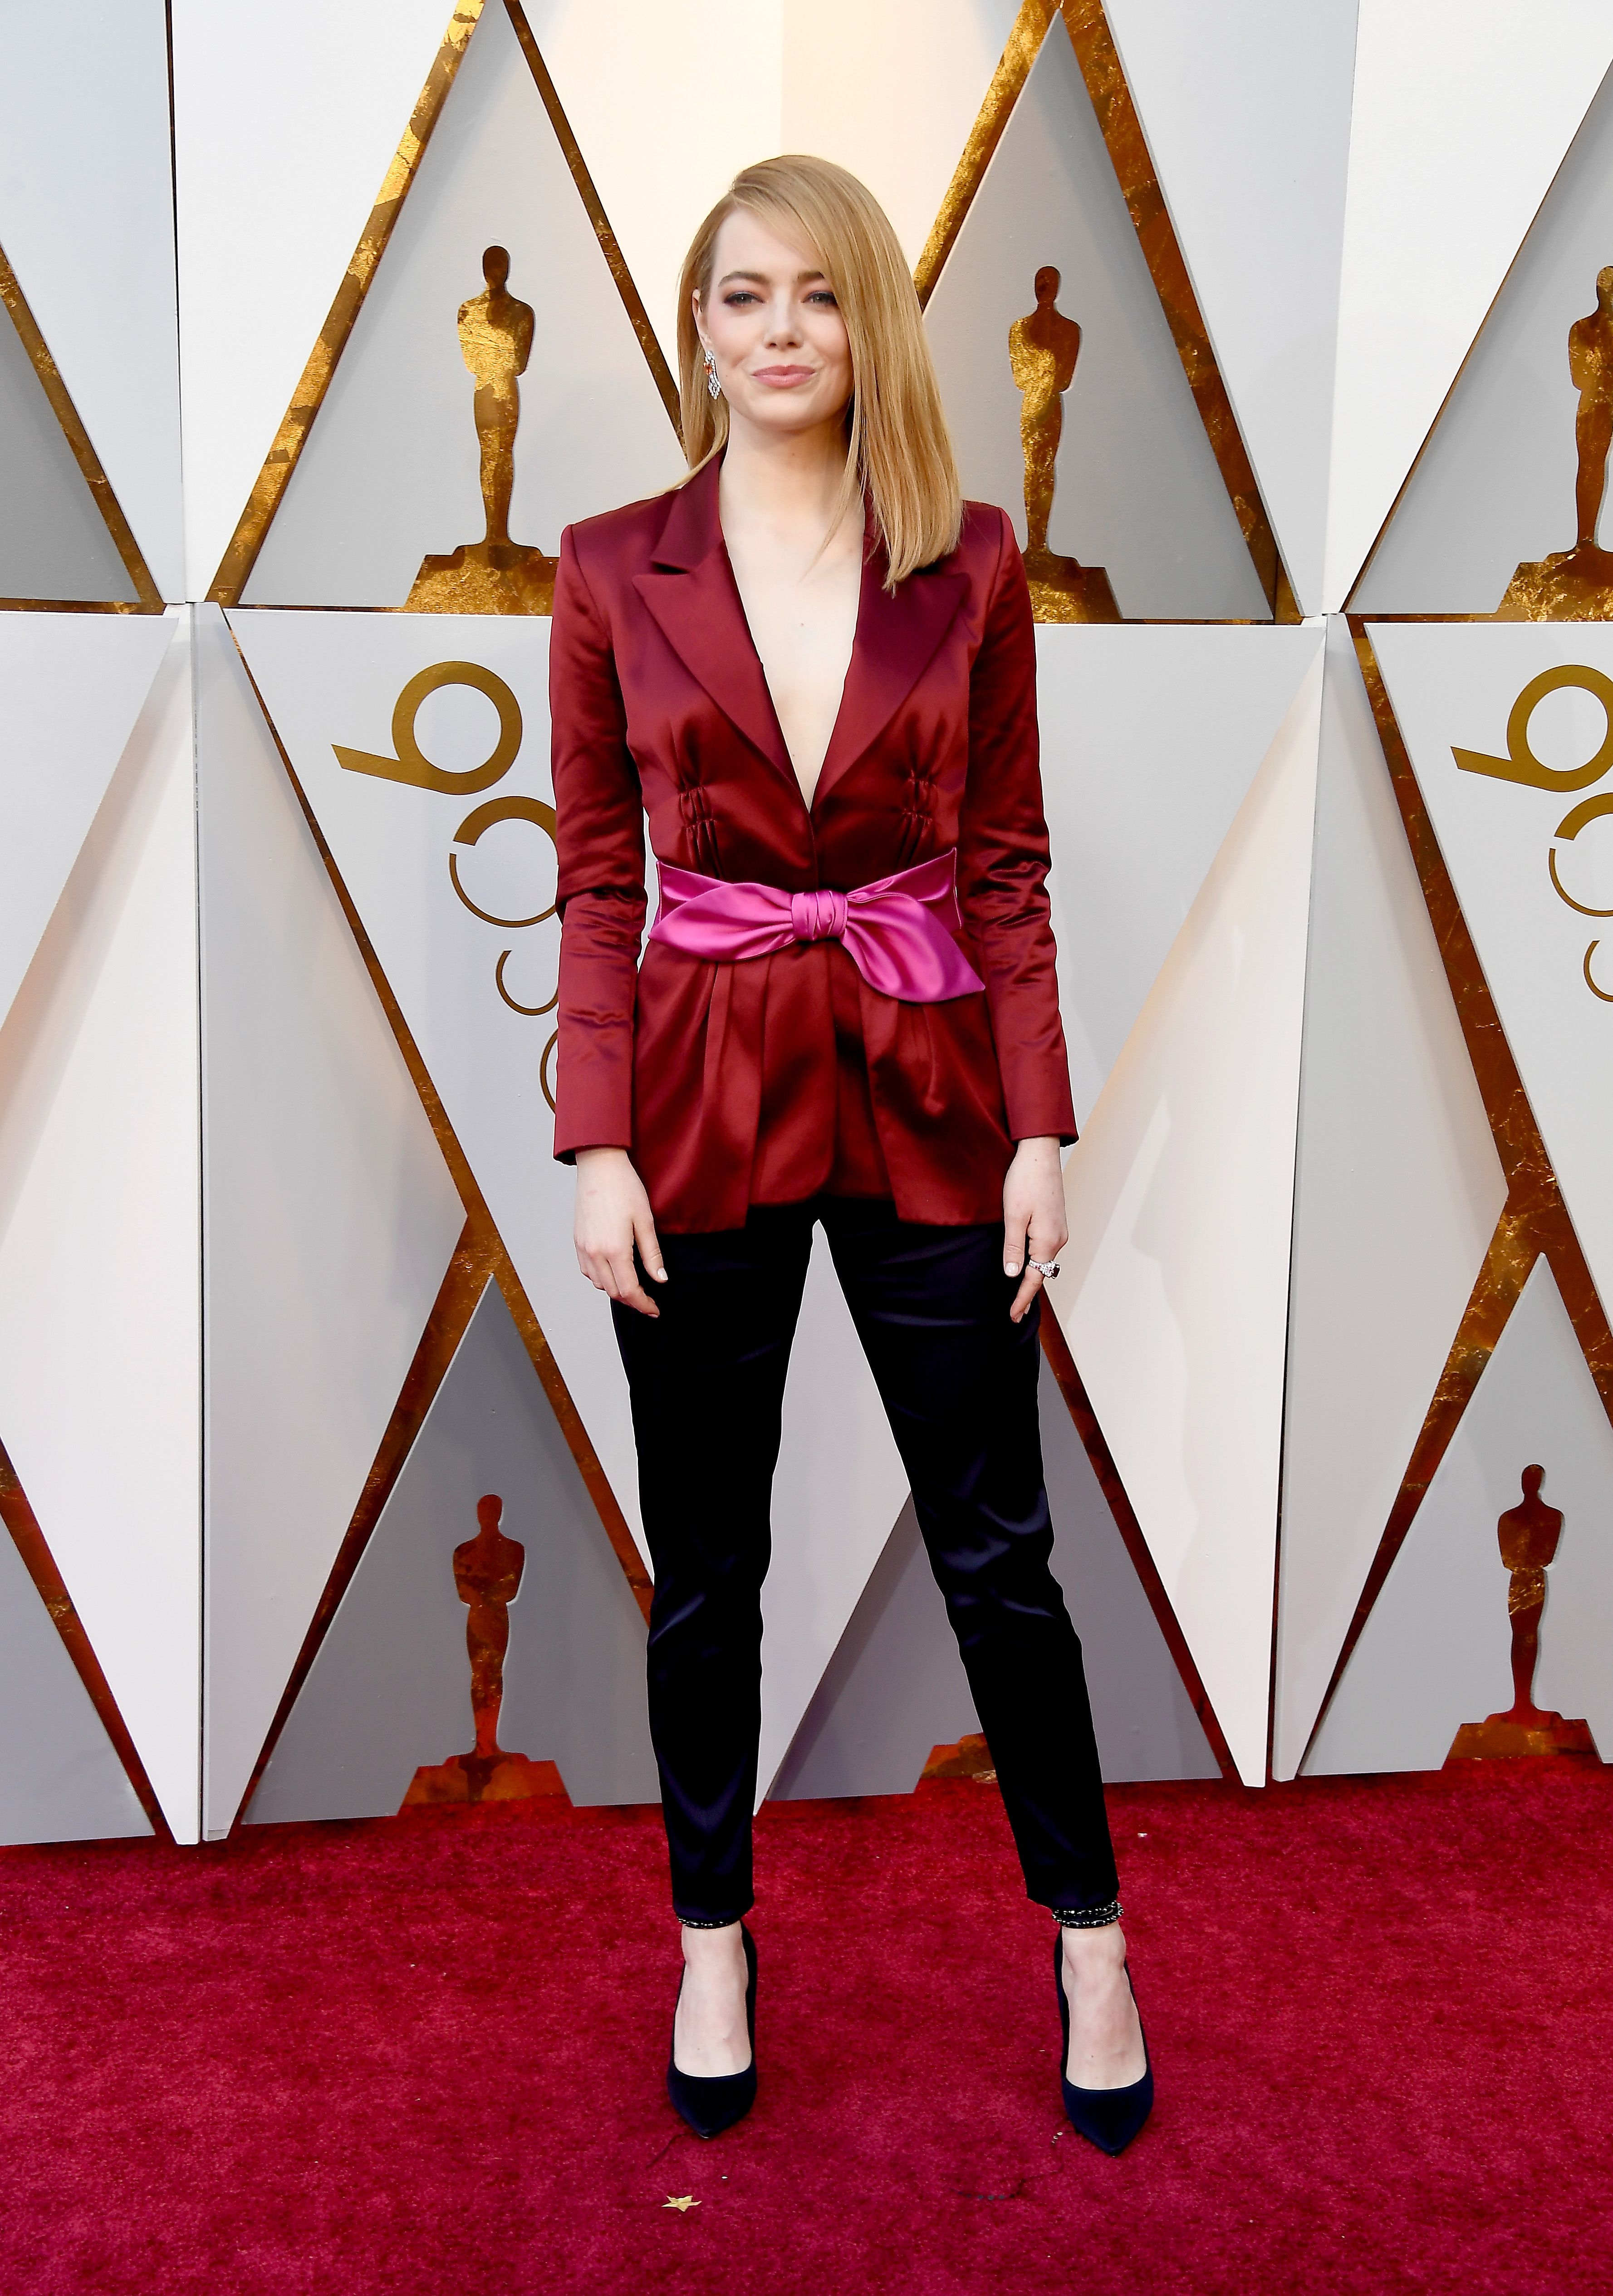 Red Carpet Watch: Emma Stone 